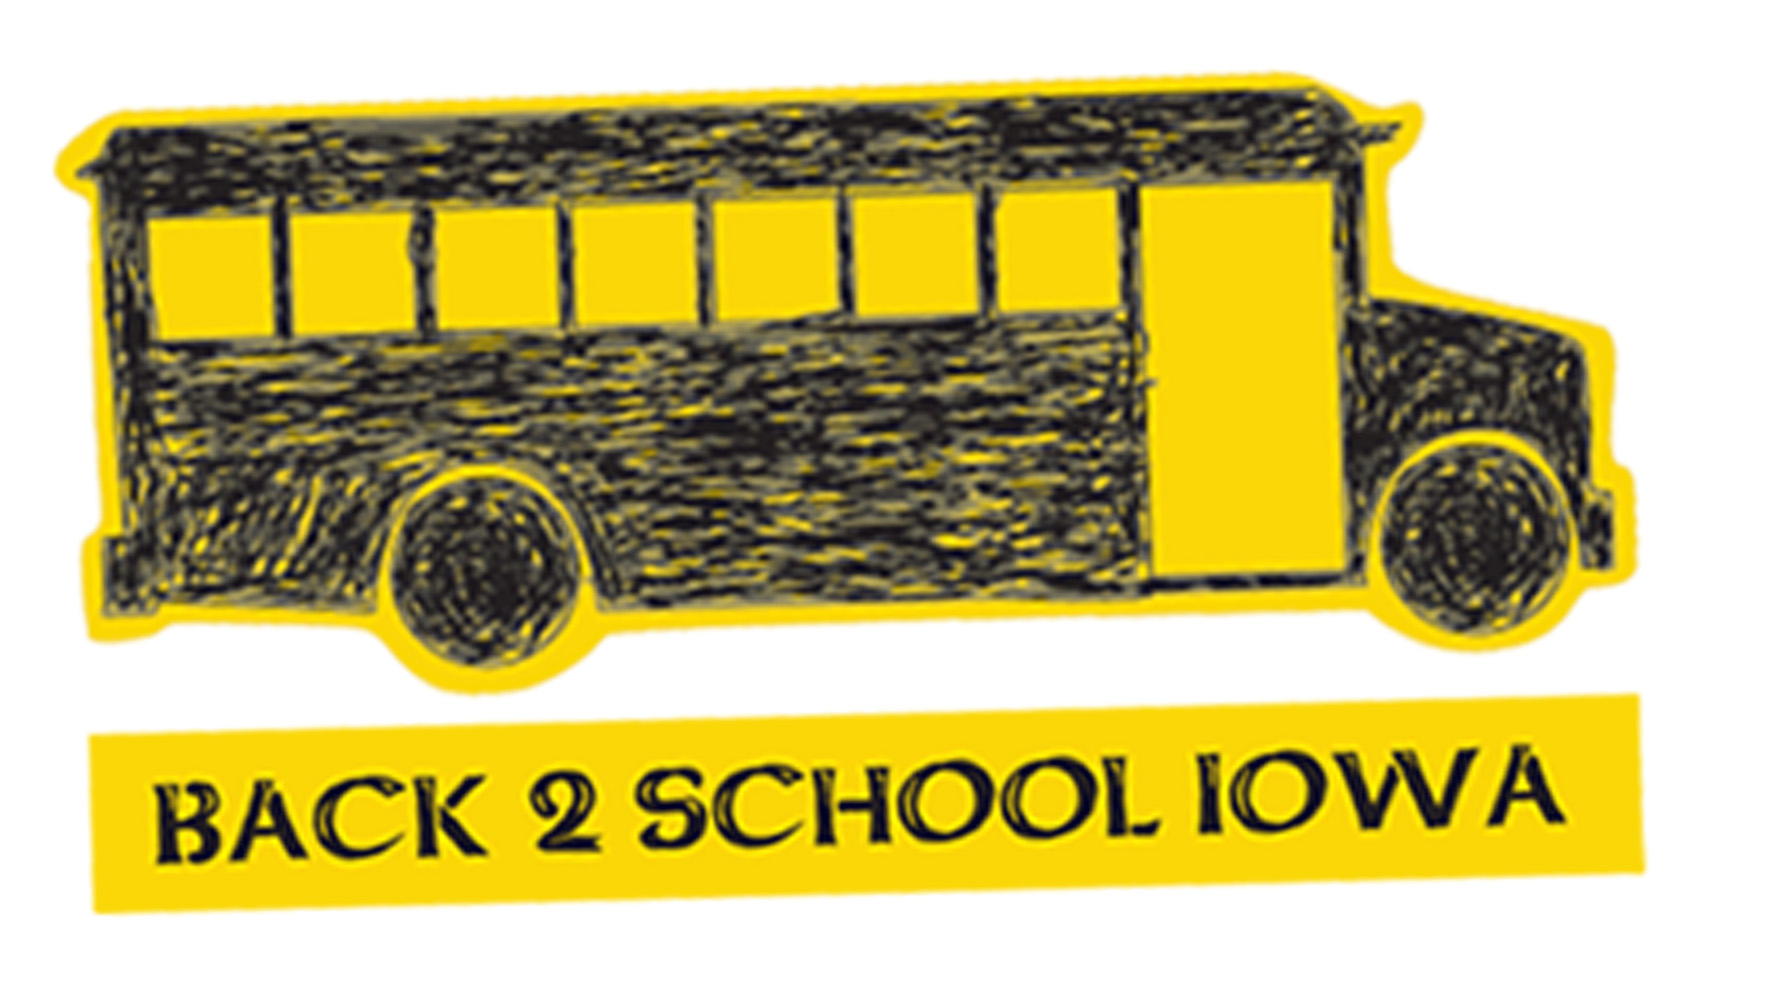 Back 2 School Iowa logo with school bus